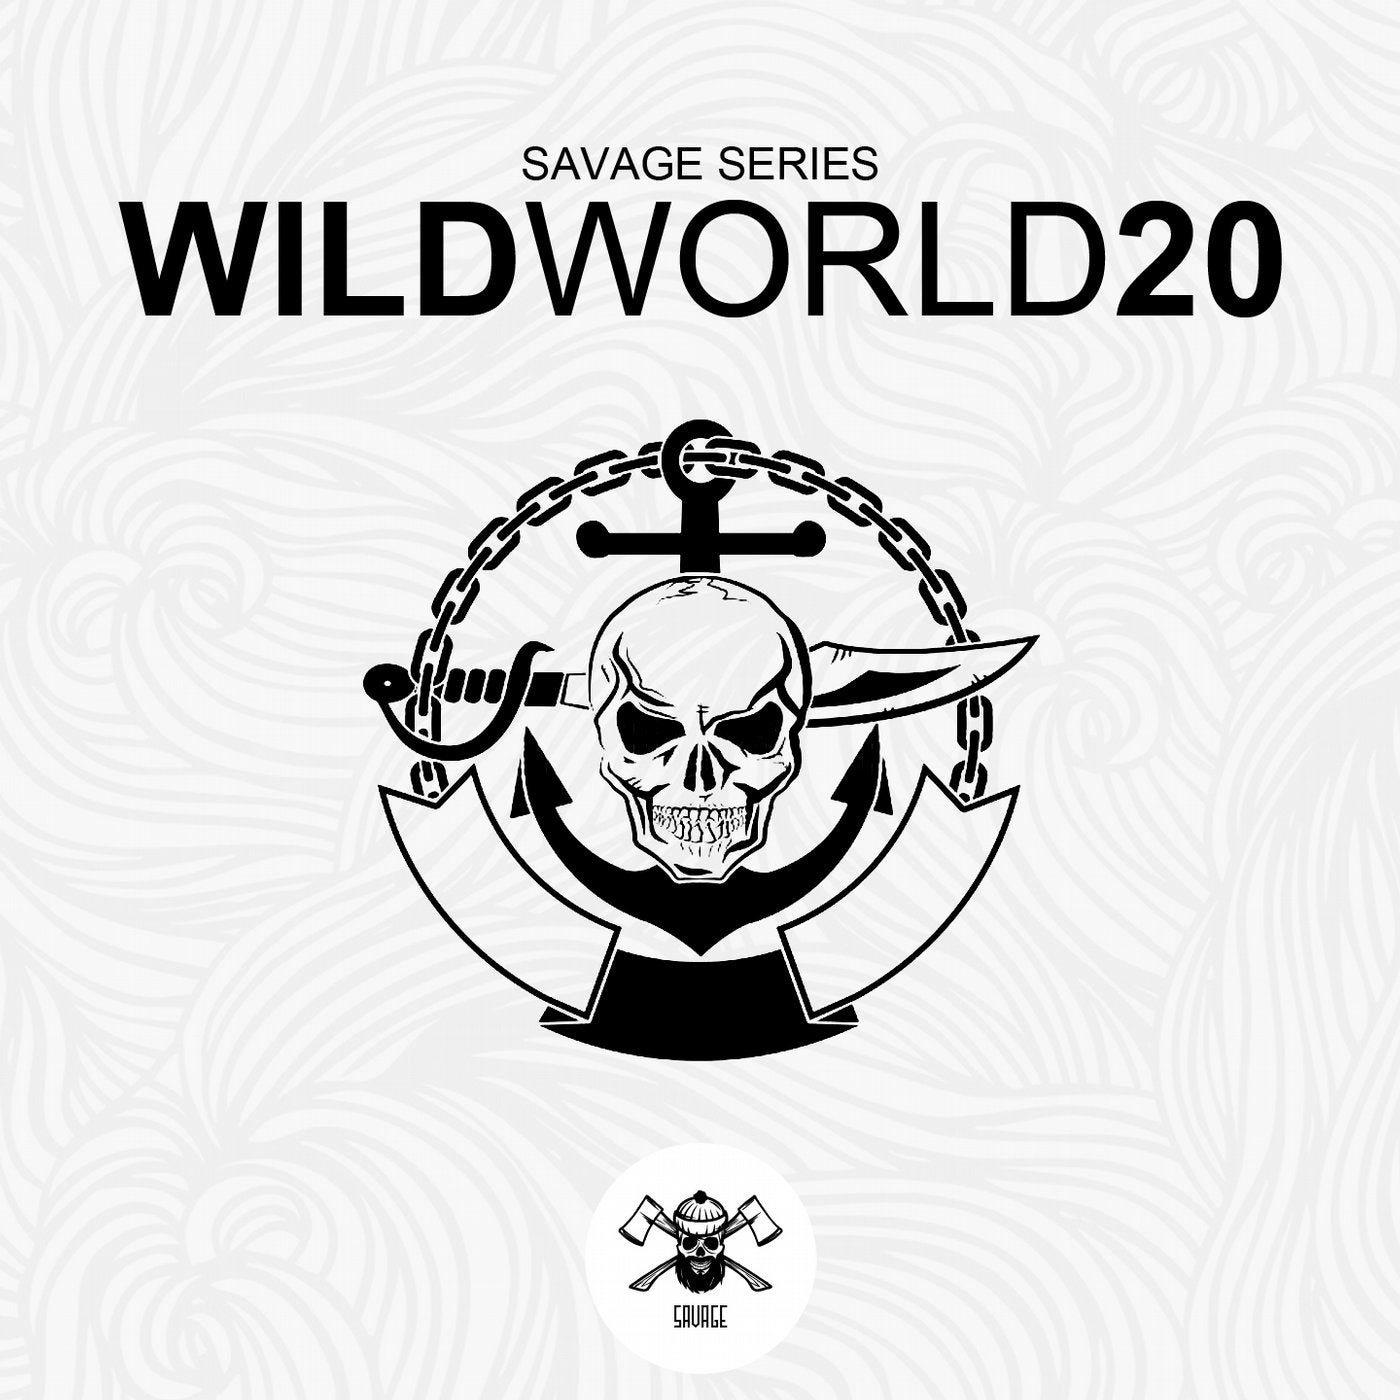 WildWorld20 (Savage Series)